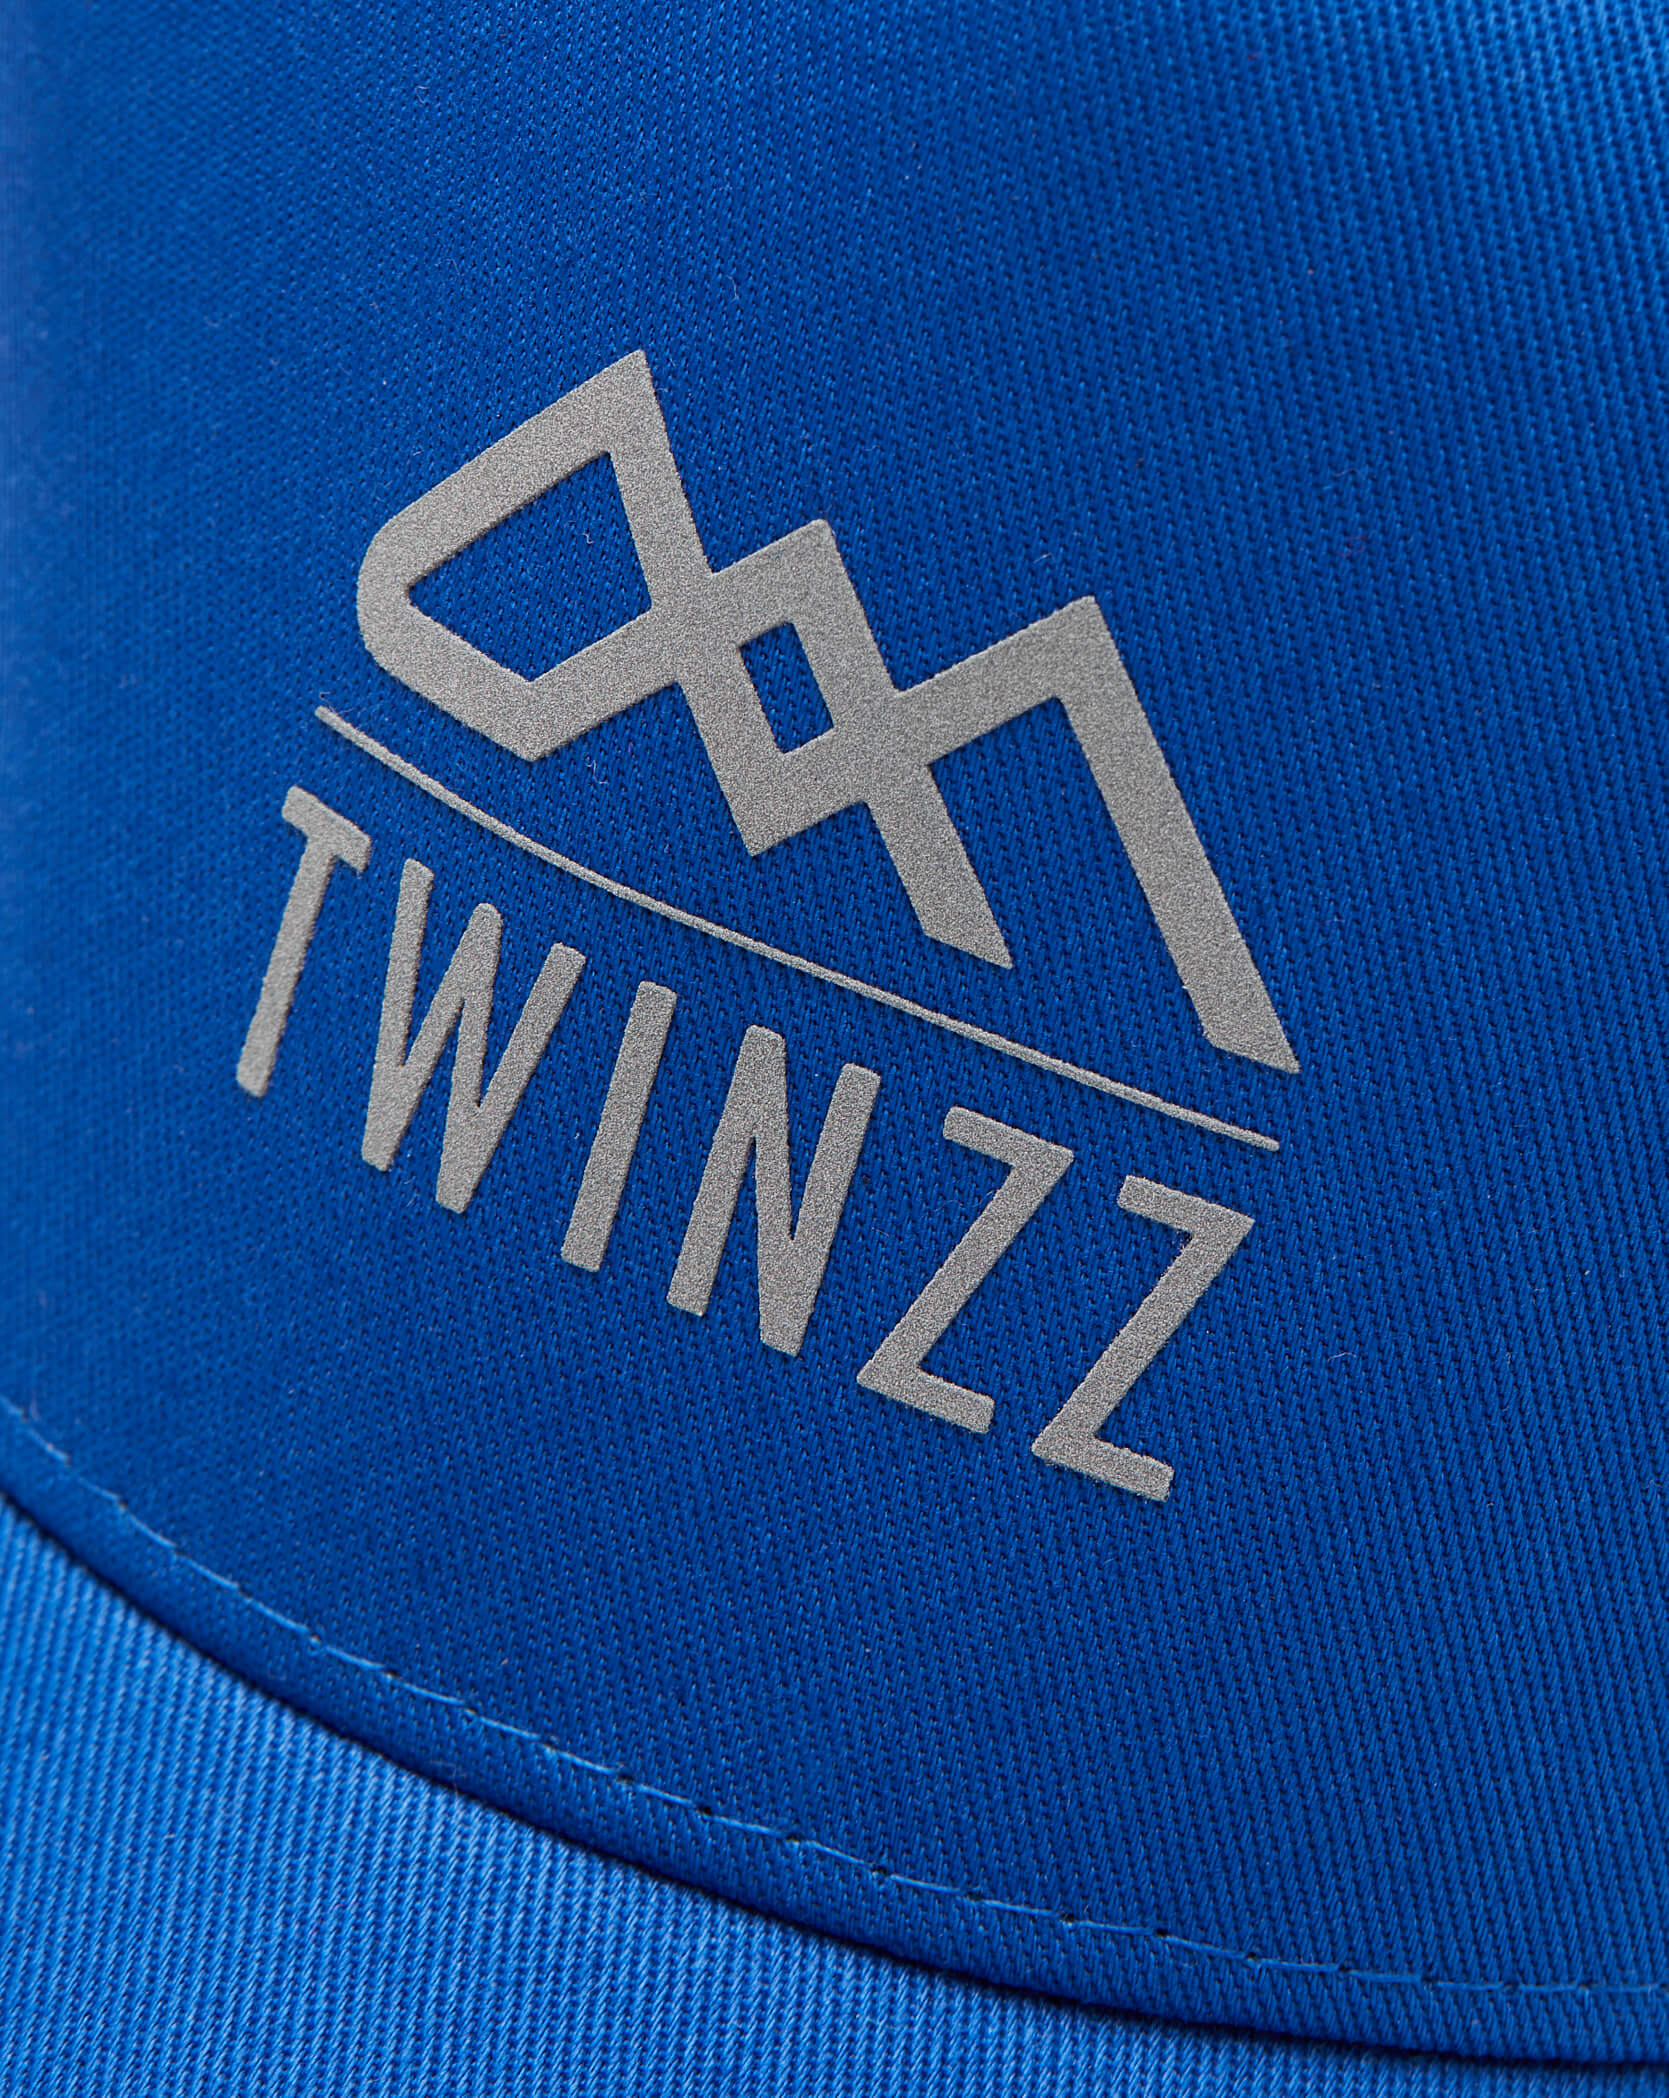 Twinzz blue trucker hat with silver logo